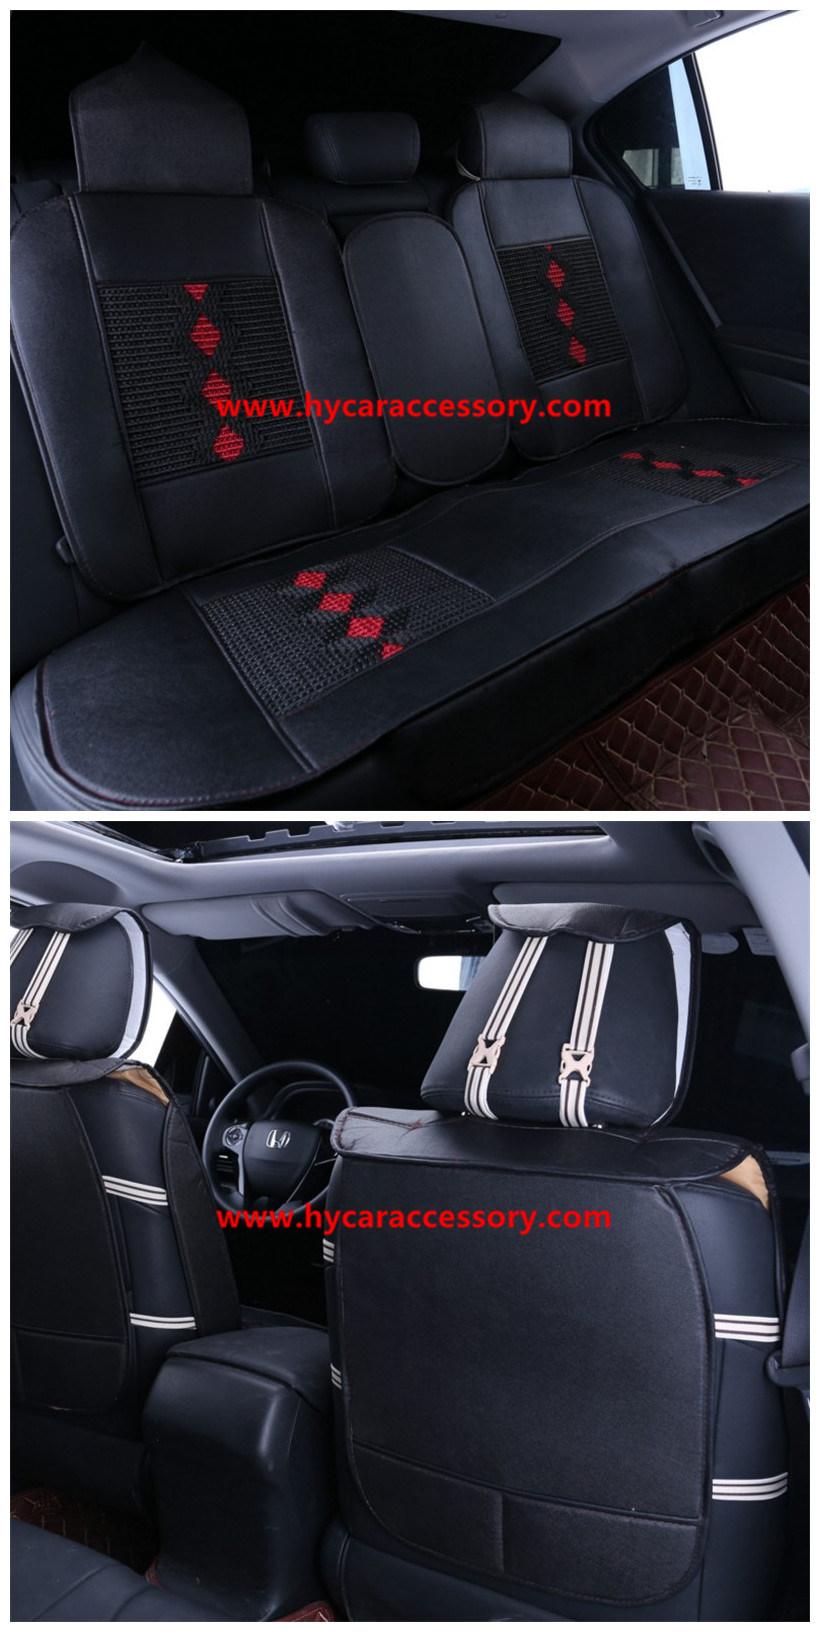 Car Accessories Car Decoration Cushion Universal Black Ice Silk PU Leather Auto Car Seat Cover